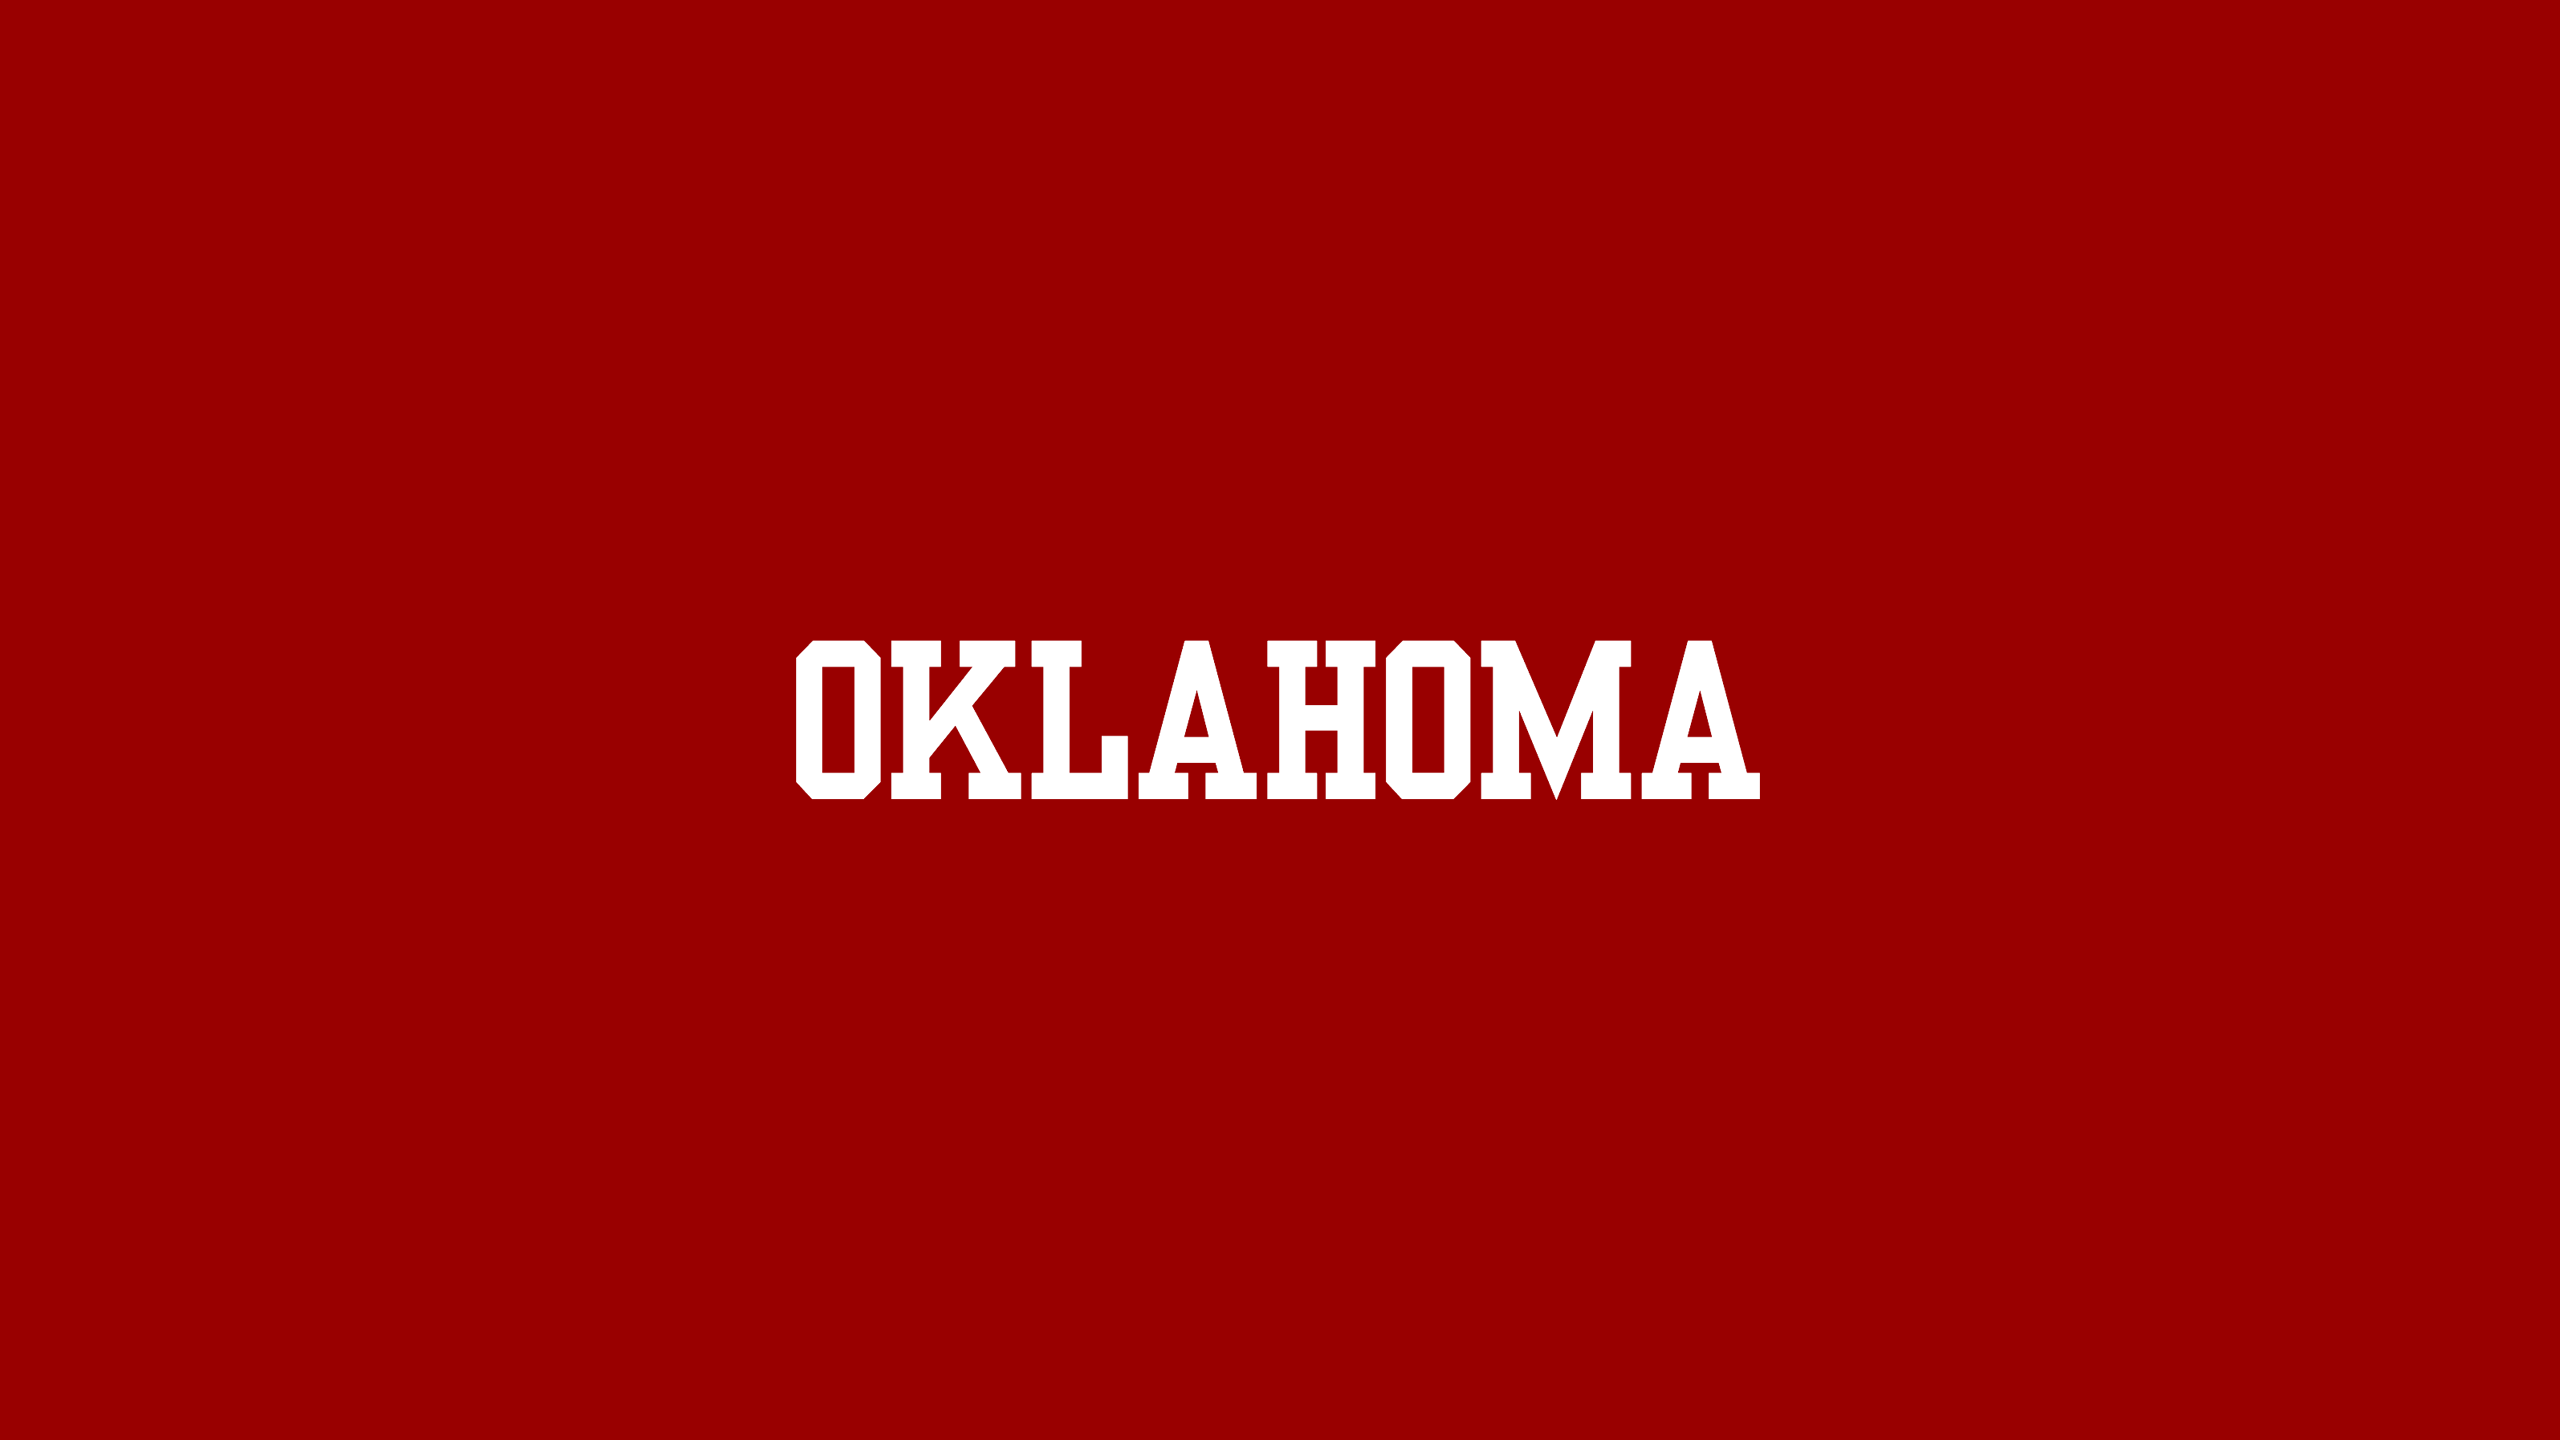 Oklahoma Sooners Basketball - NCAAB - Square Bettor